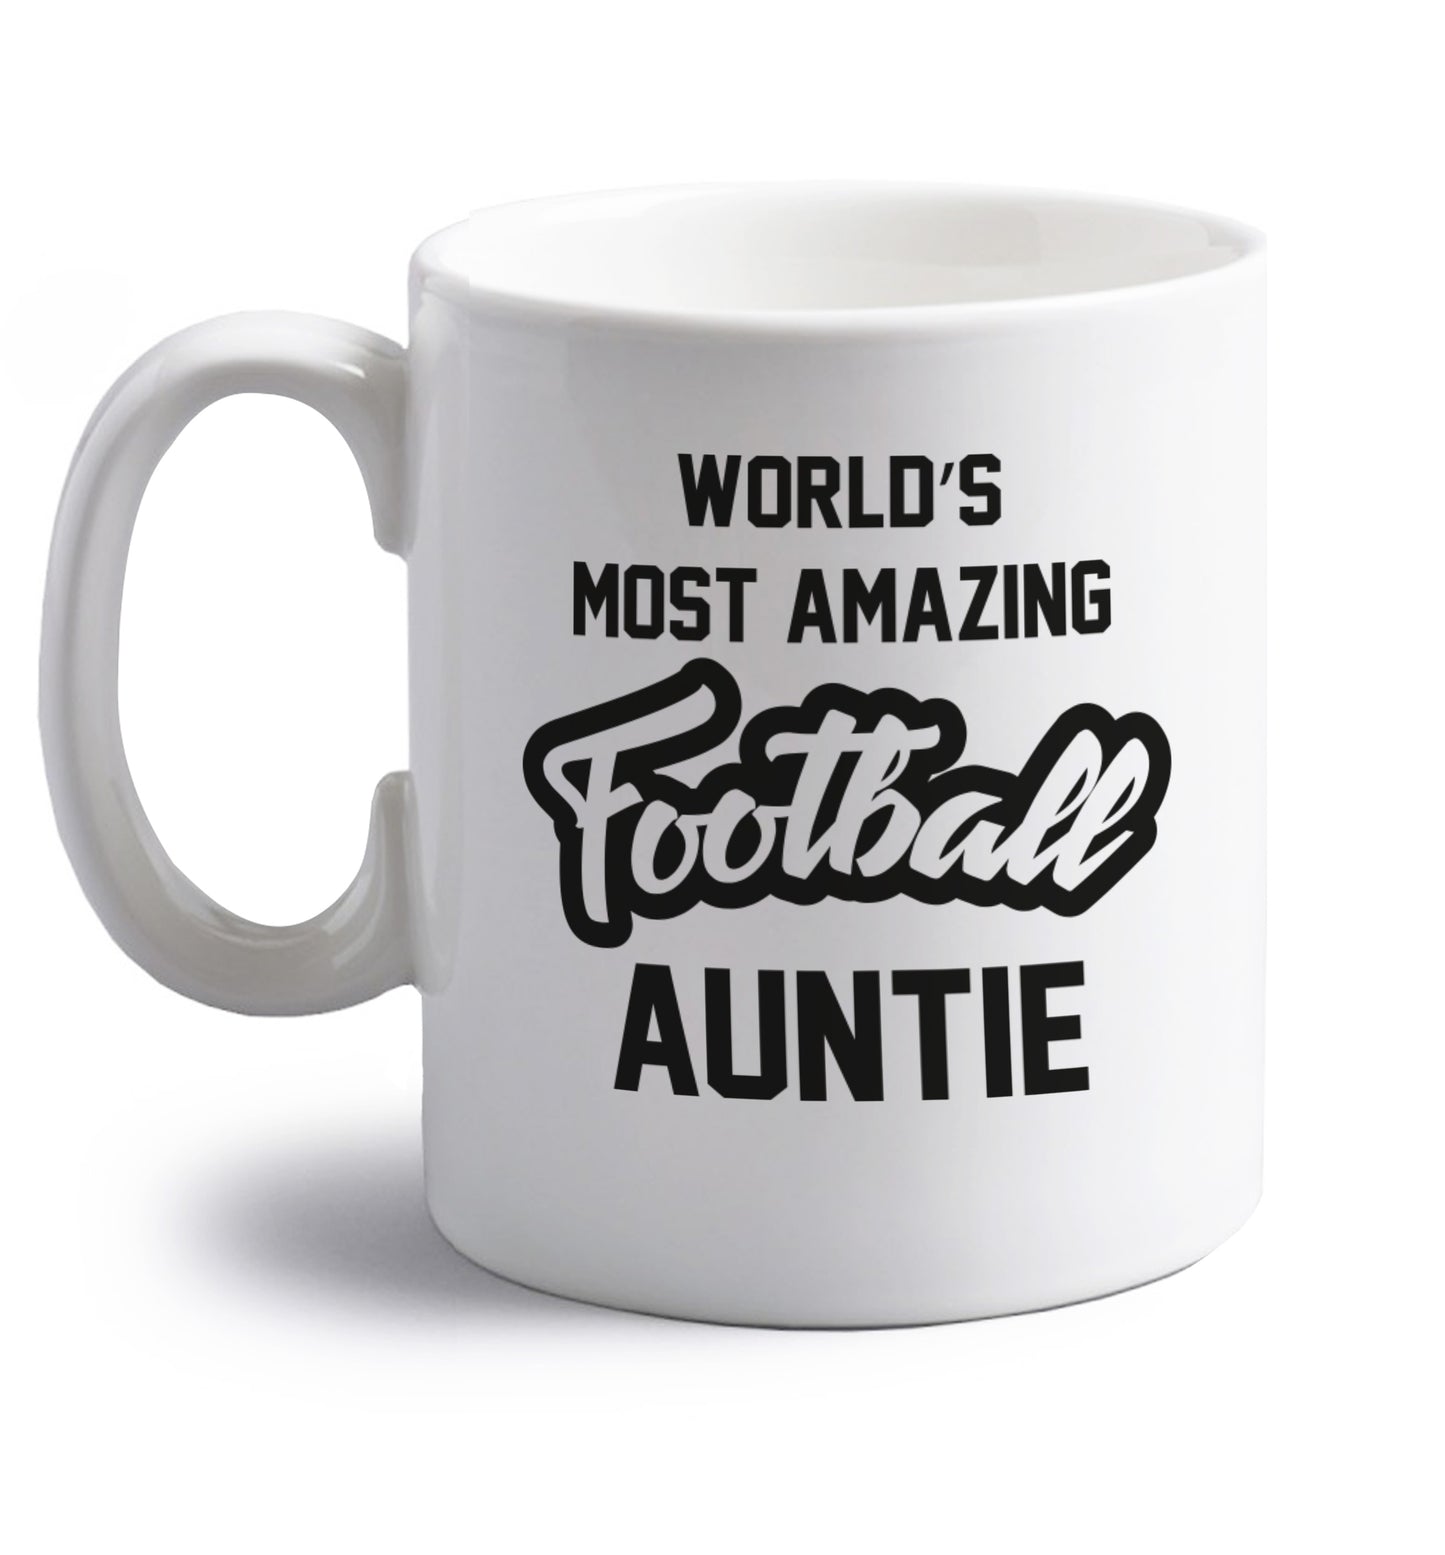 Worlds most amazing football auntie right handed white ceramic mug 